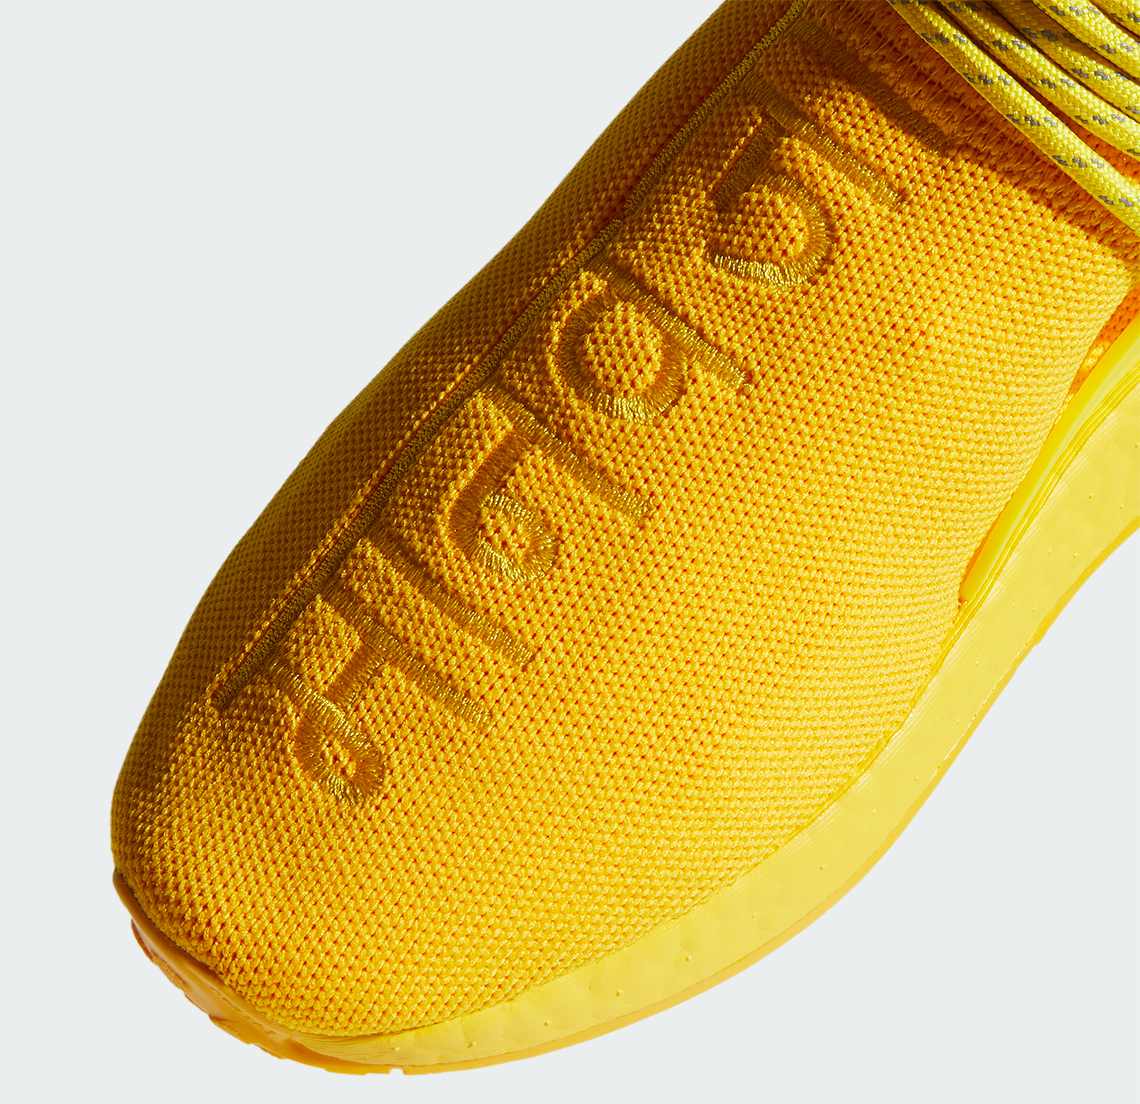 adidas nmd human race pharrell hu yellow